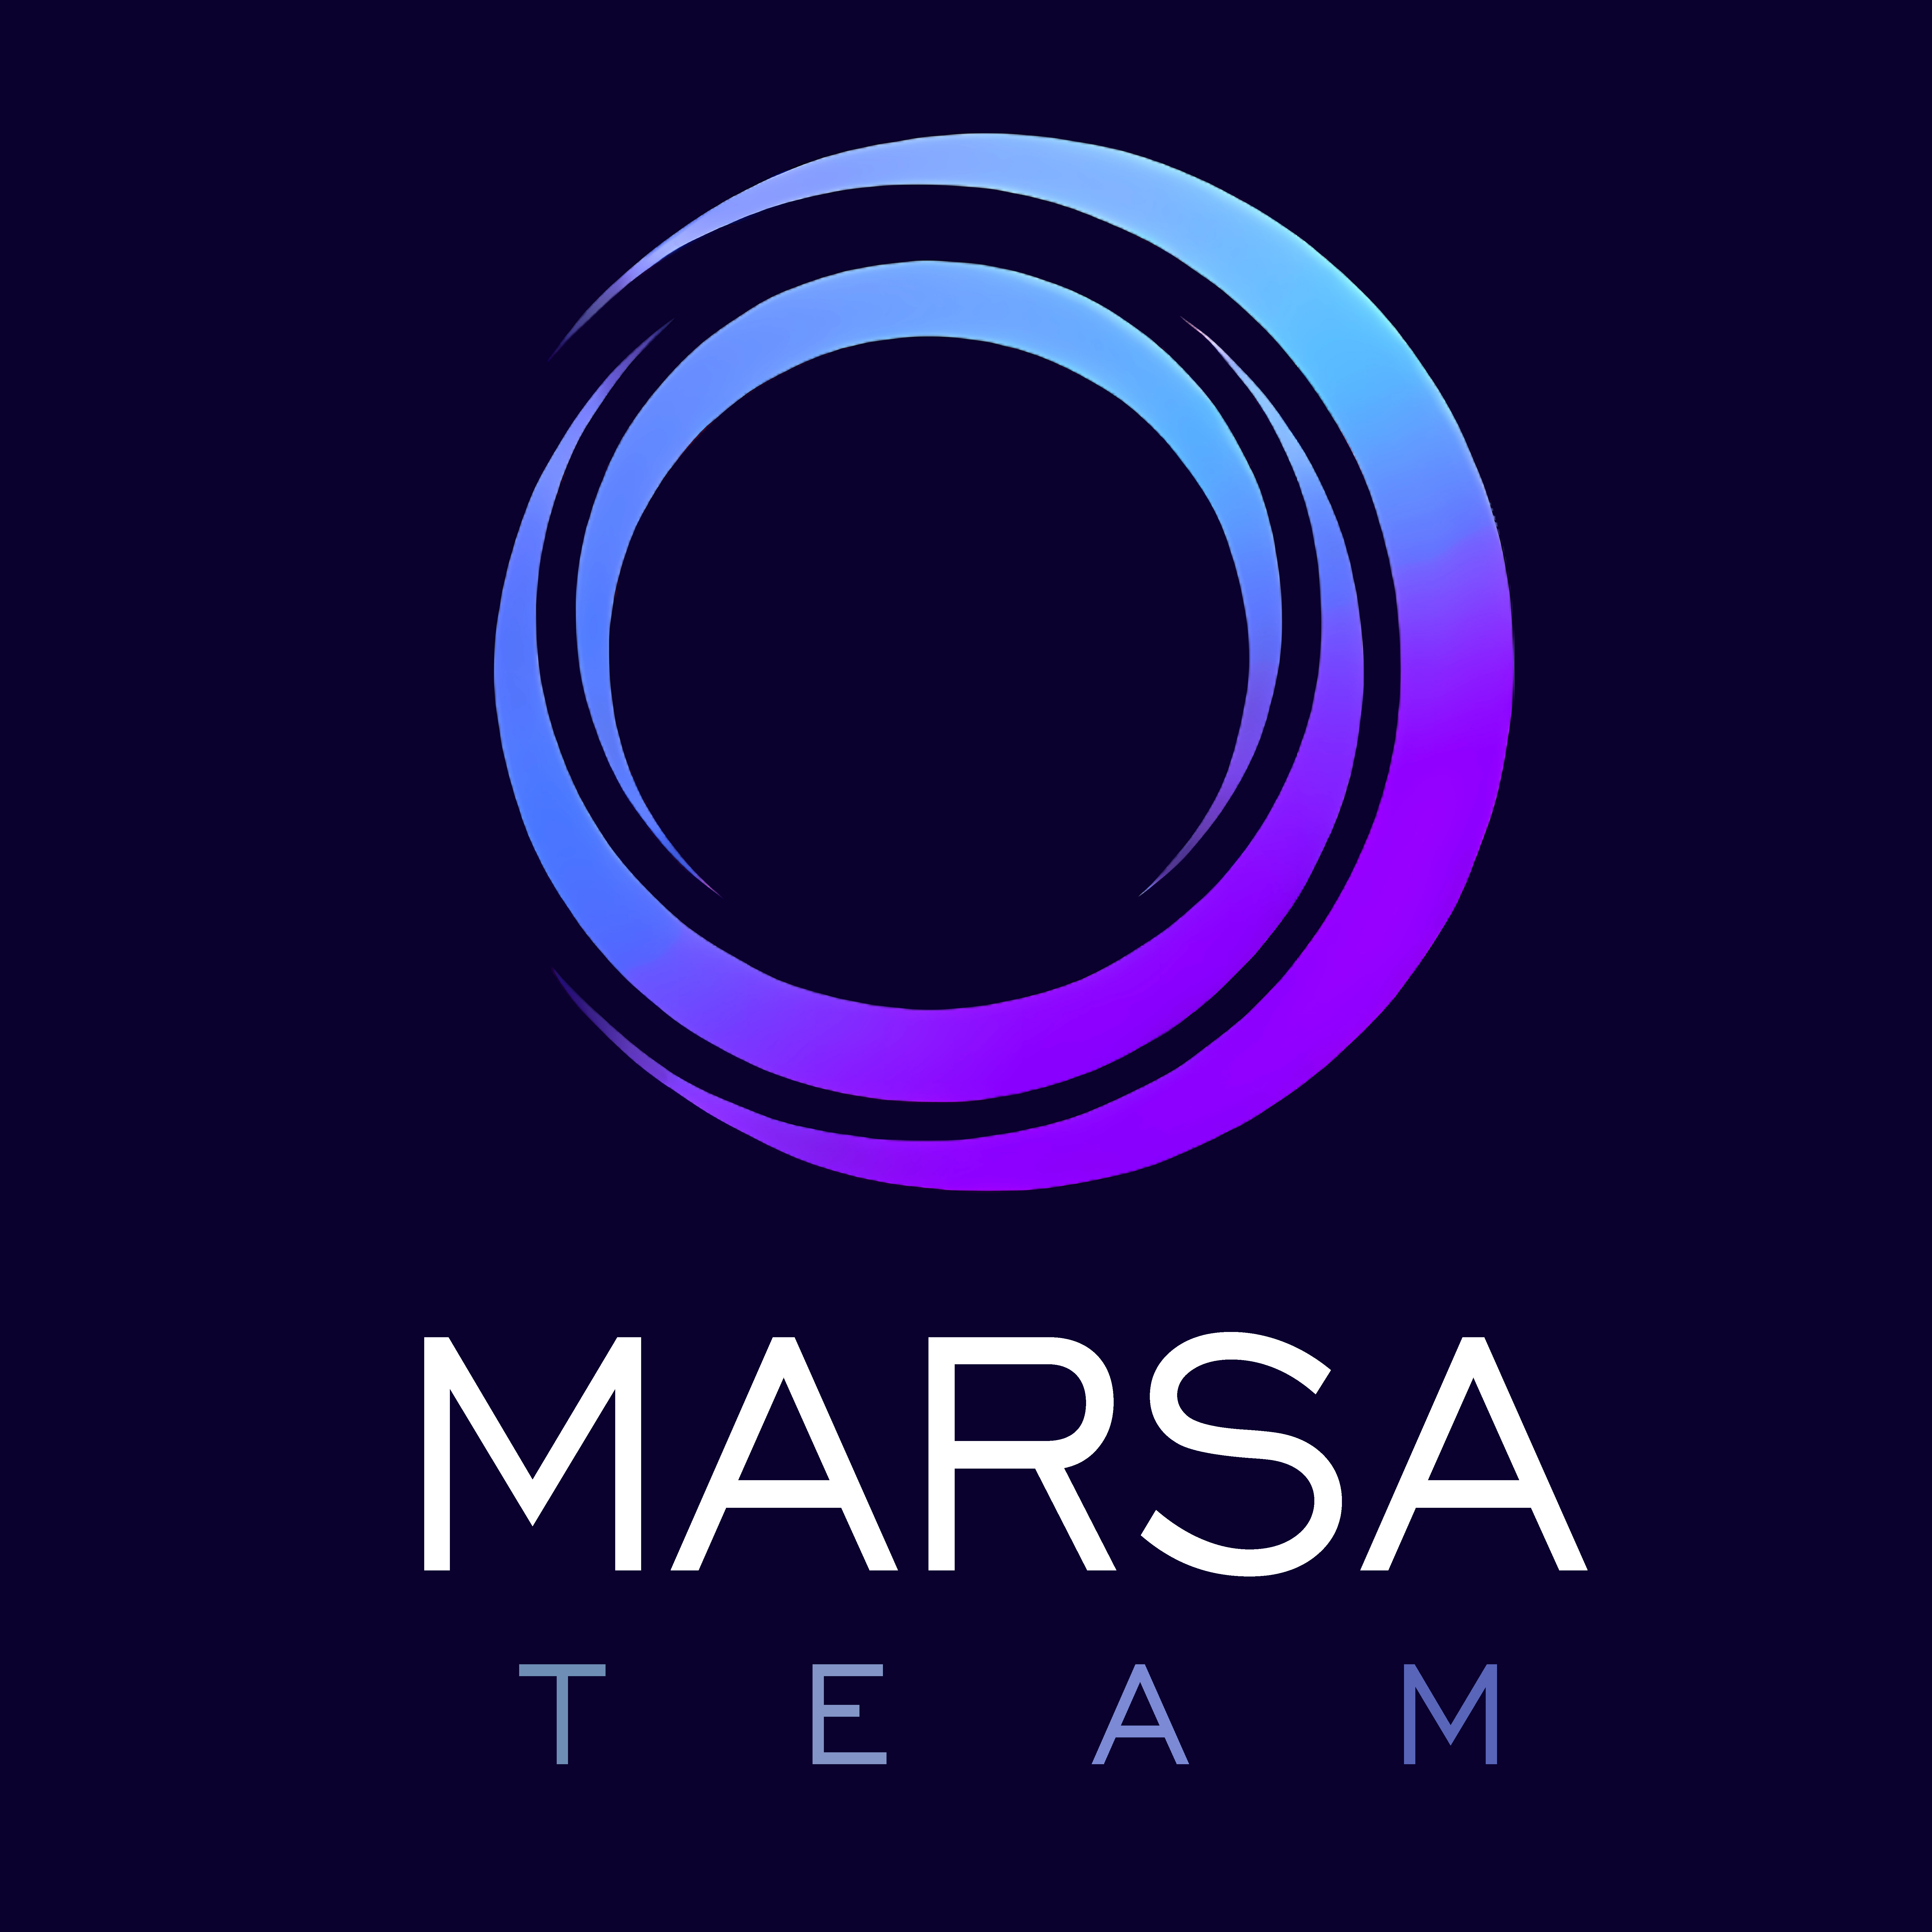 Marsa Team